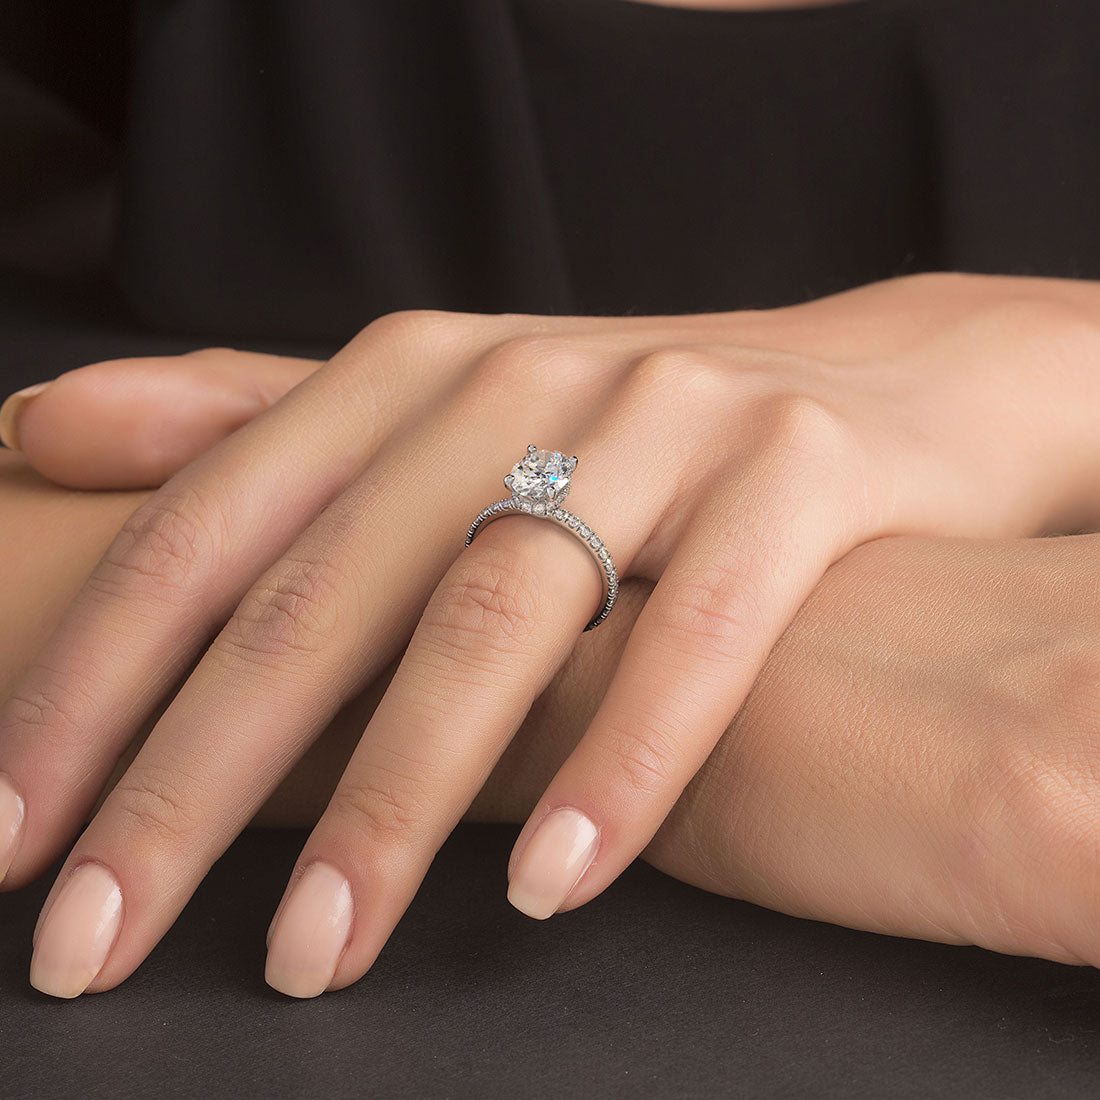 Oval Shape Hidden Halo Petite Micropavé Diamond Engagement Ring Setting